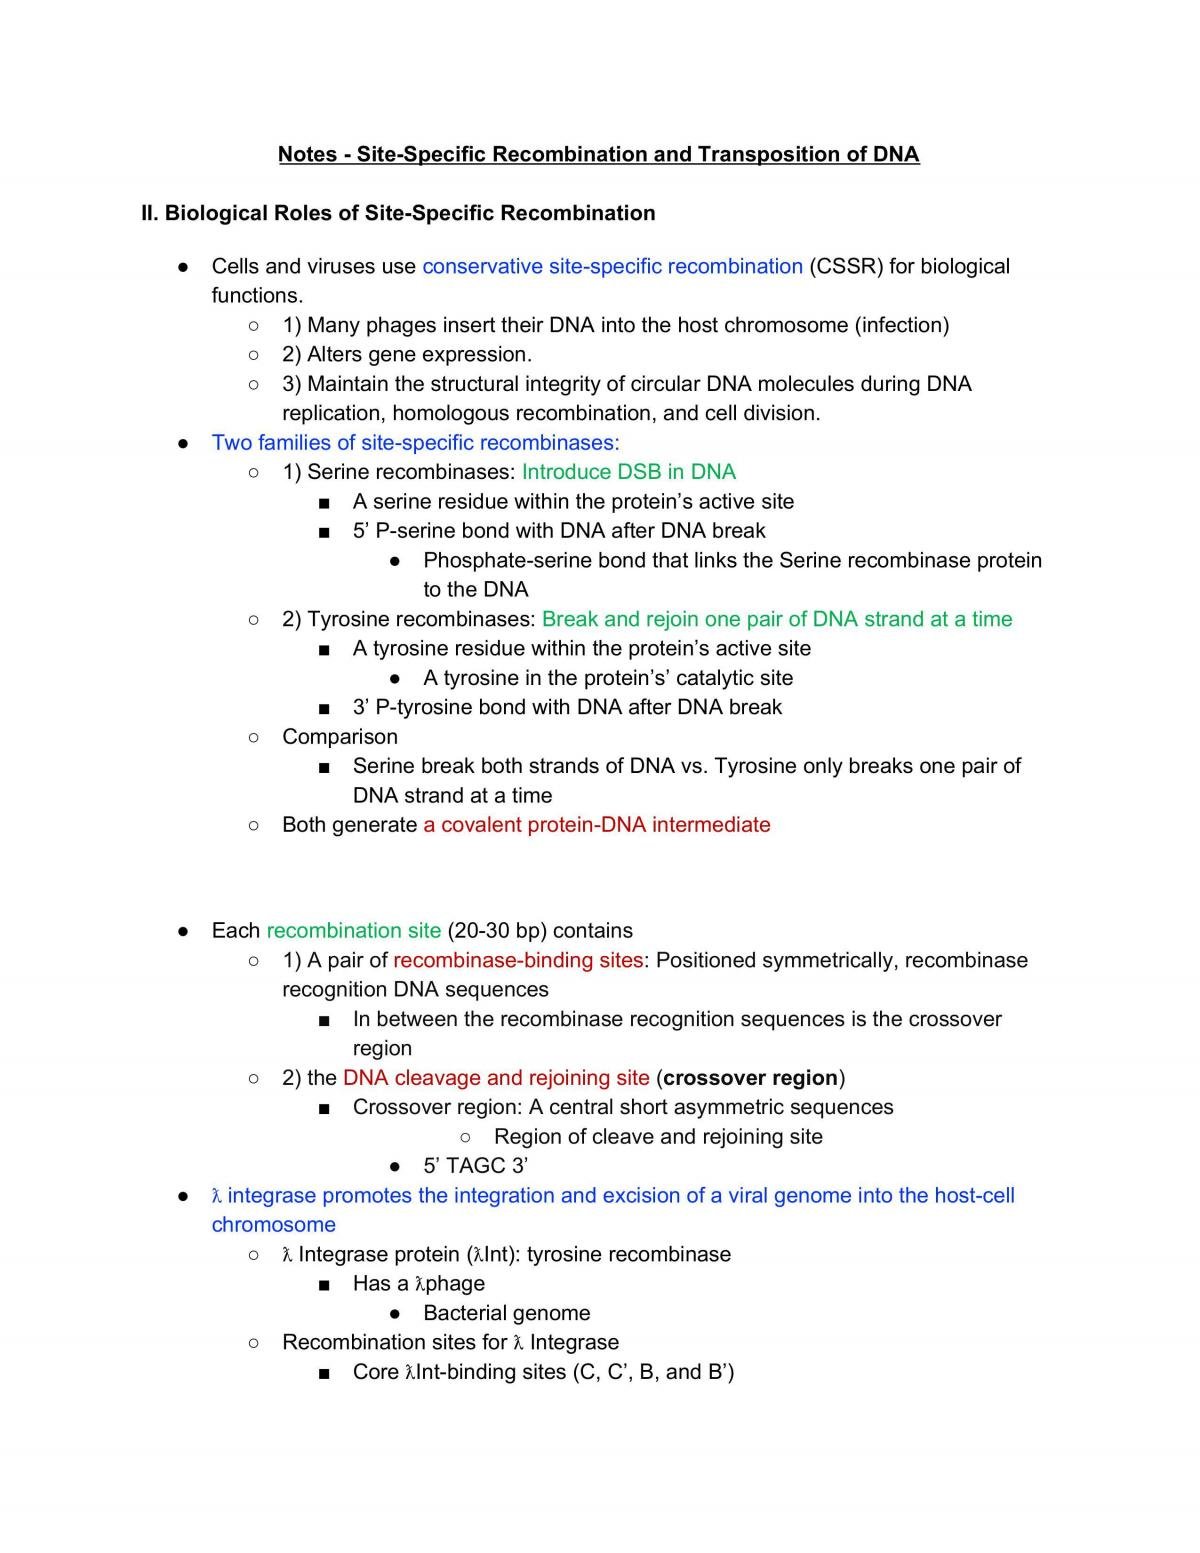 BIO 372 Molecular Biology Study Notes - Page 37